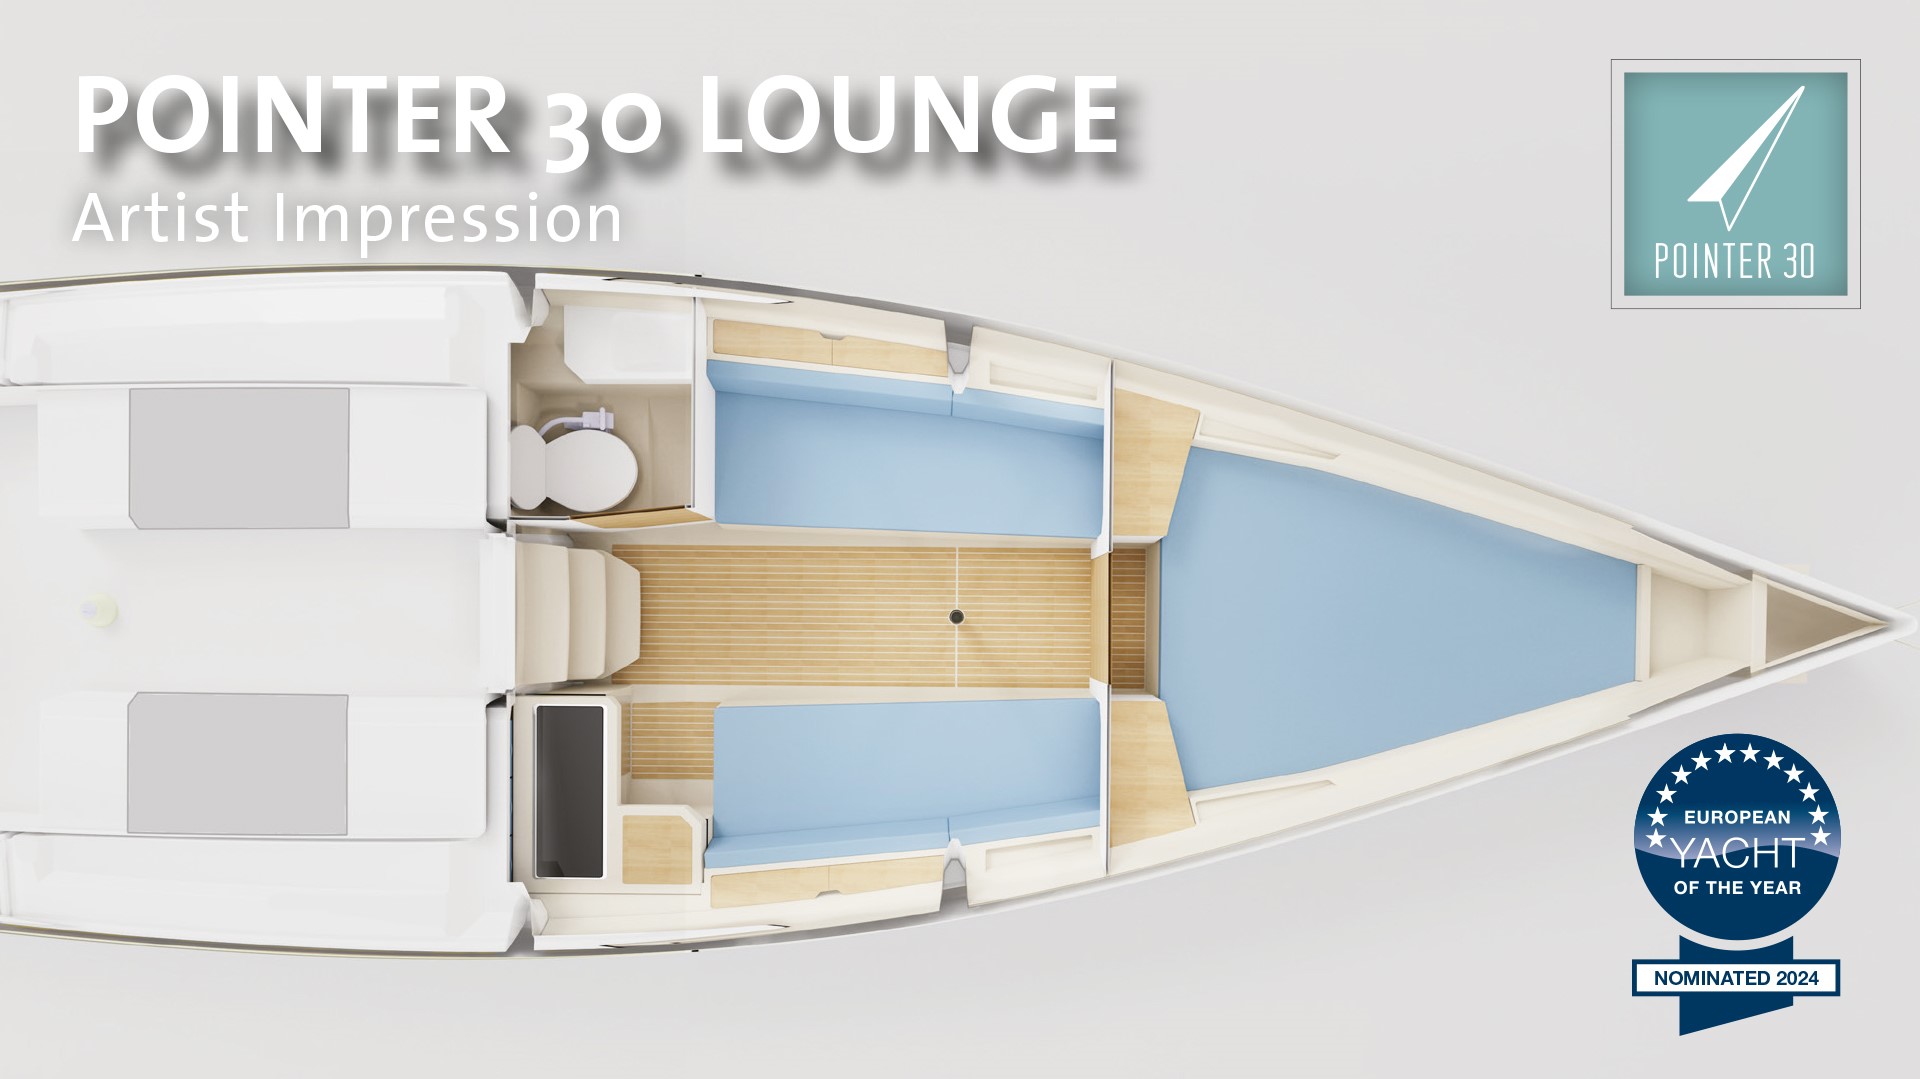 Pointer 30 Lounge Artist Impression